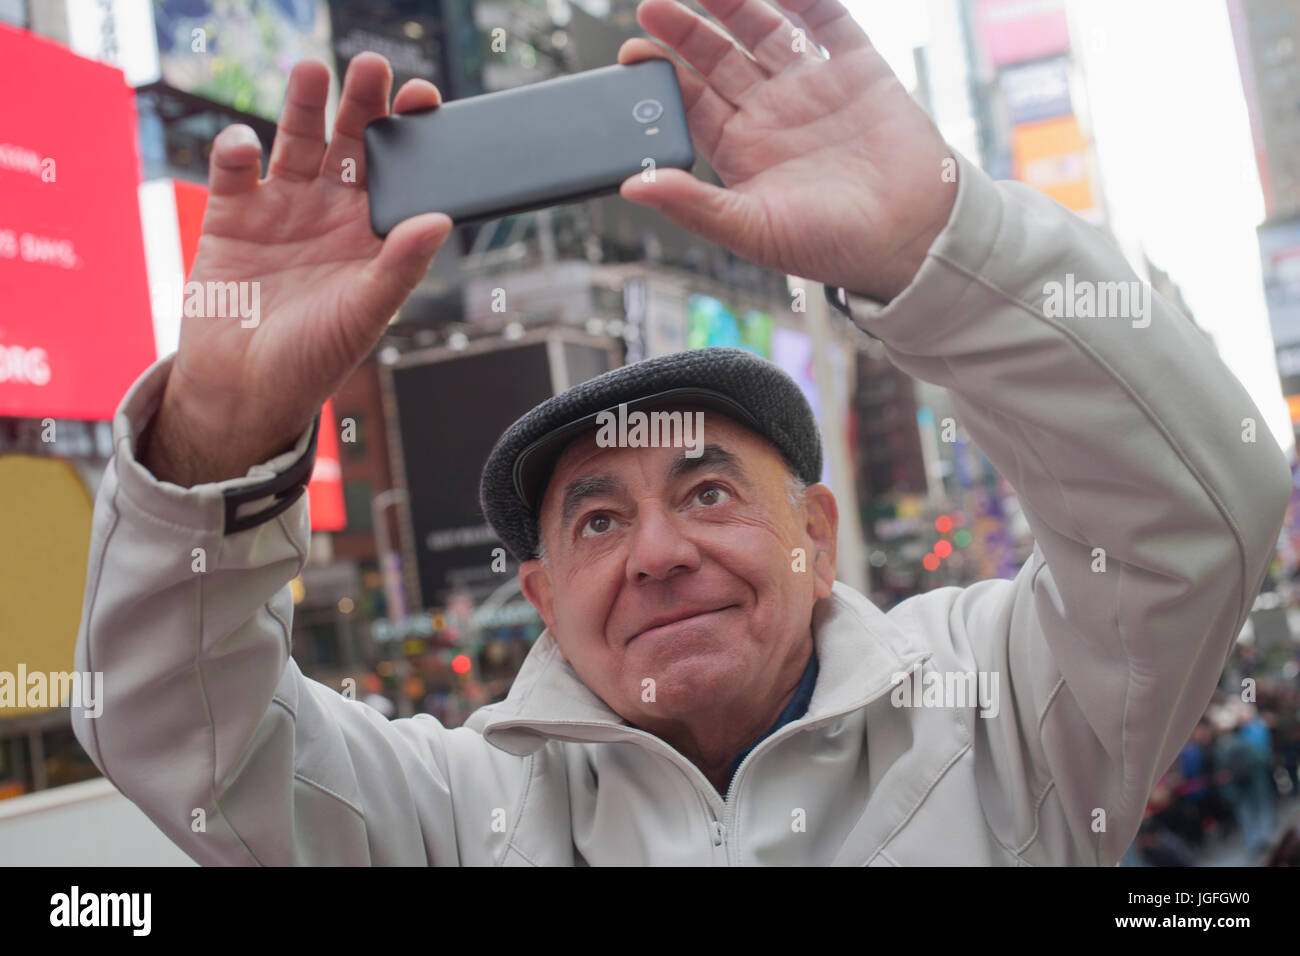 Hispanic man posing for cell phone selfie in city Stock Photo